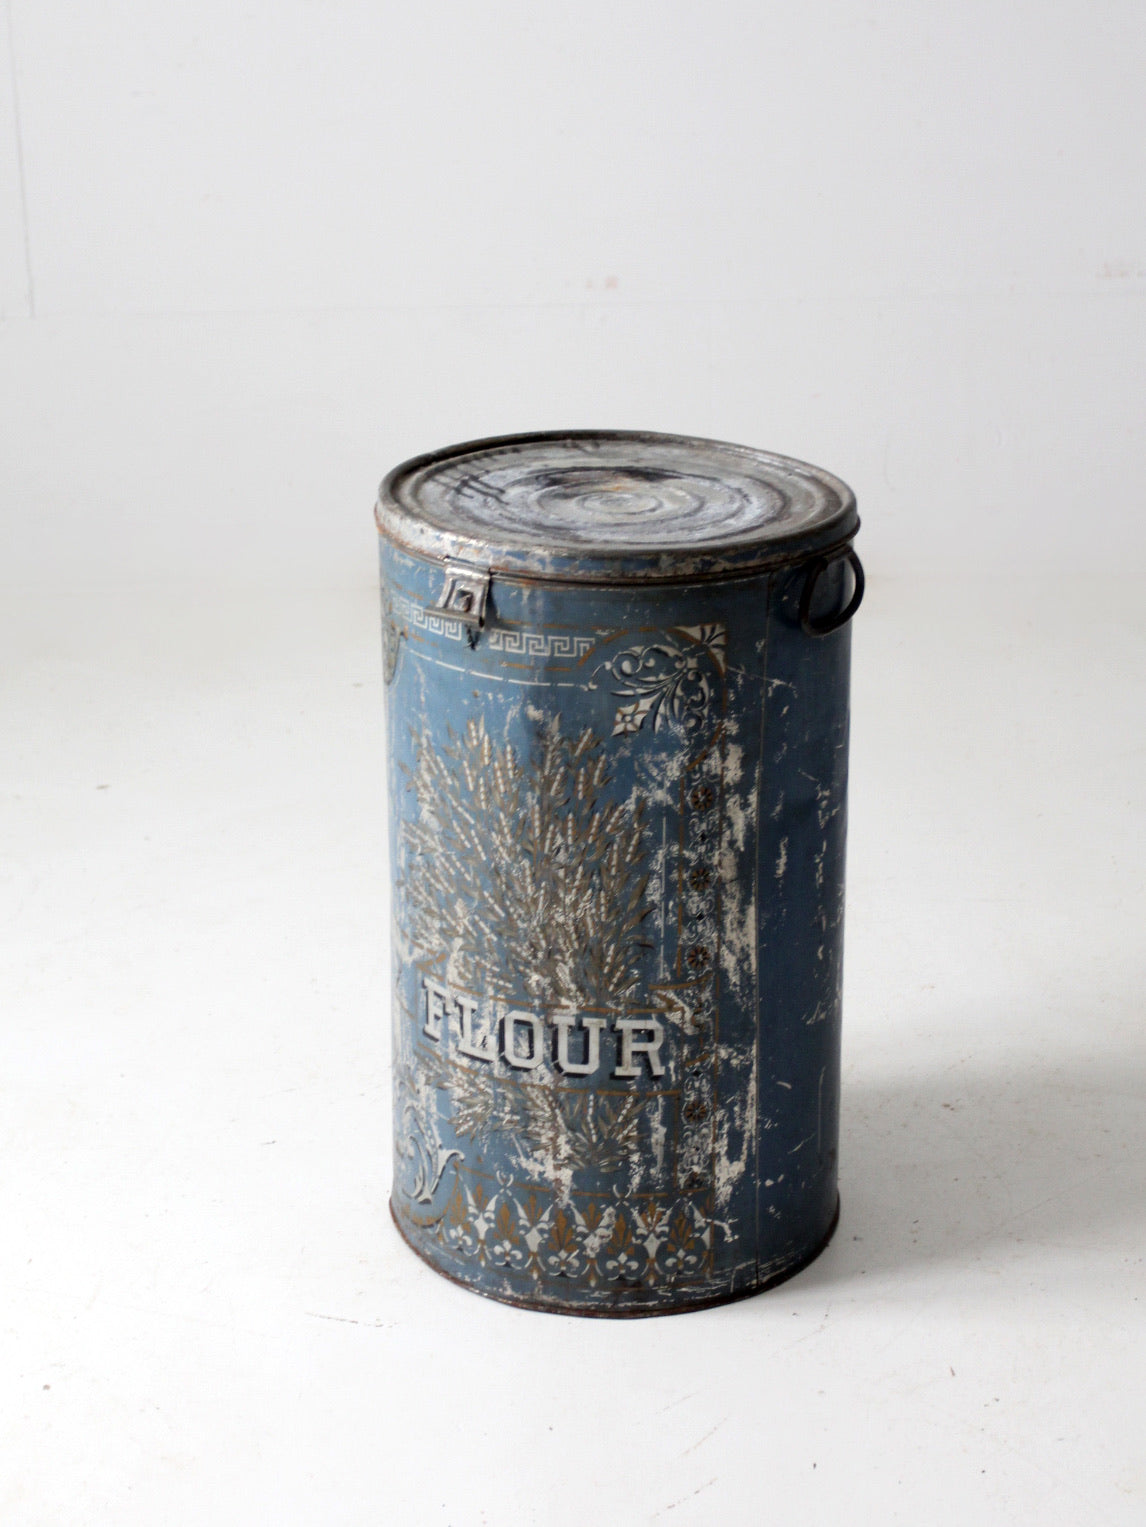 antique metal flour bin